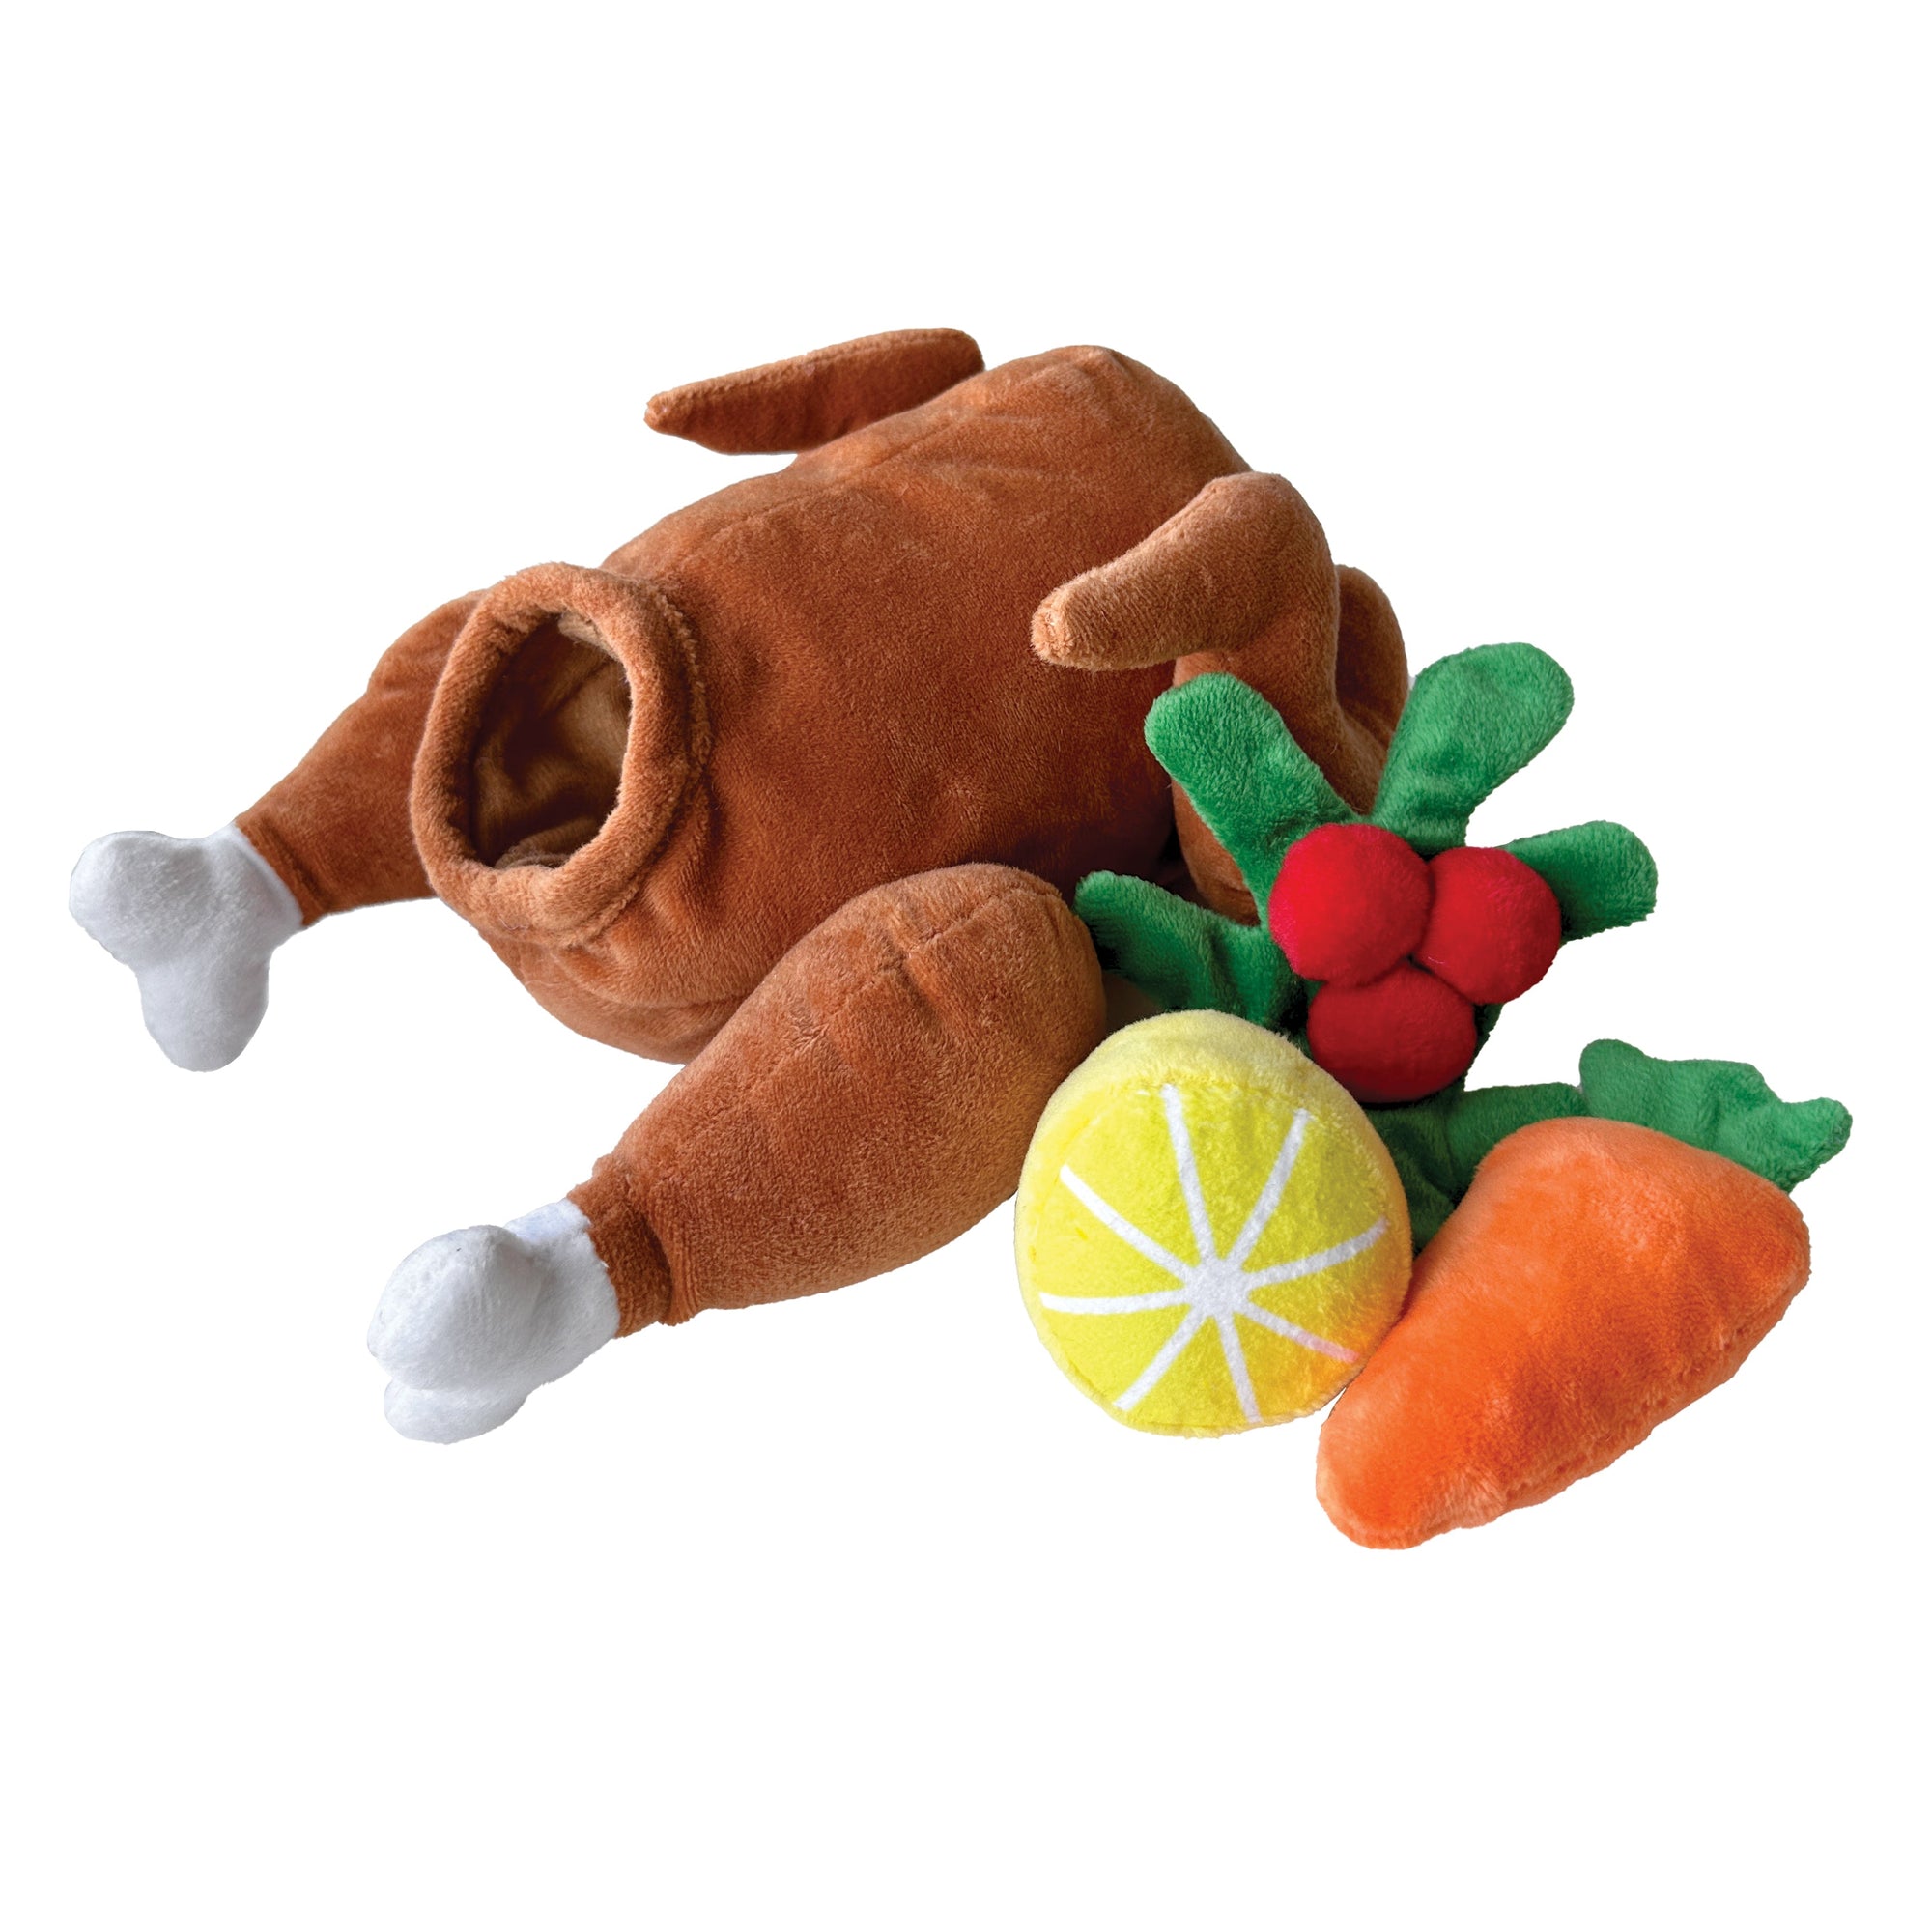 Stuffed Turkey Snuffle Dog Toy-3 in 1 Hide and Seek Toy, Snuffle